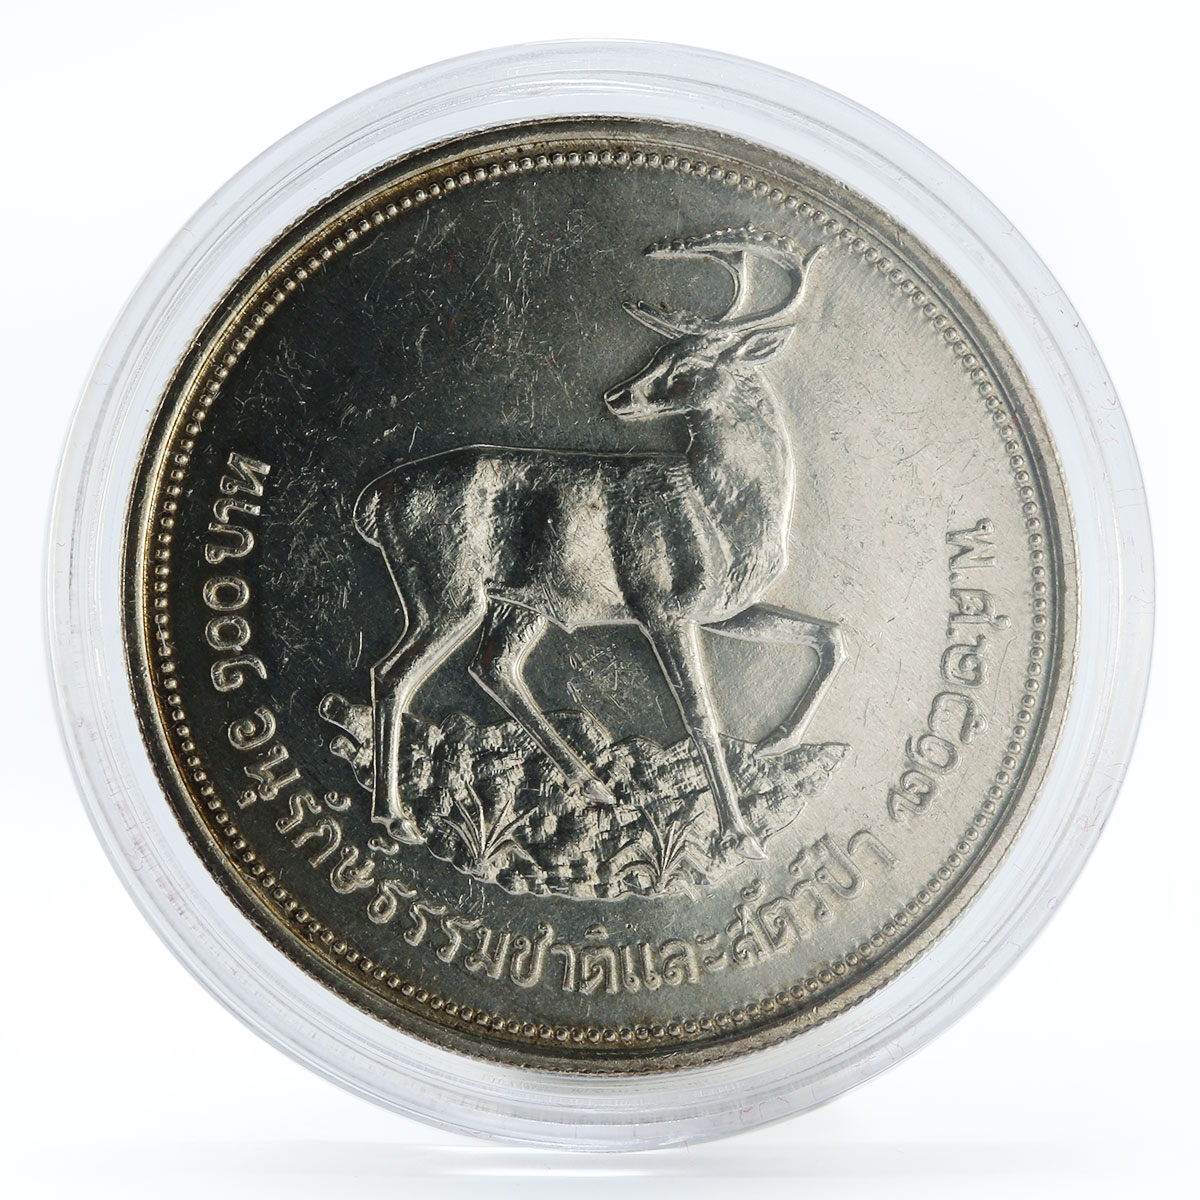 Thailand 100 baht Wildlife Deer silver coin 1974